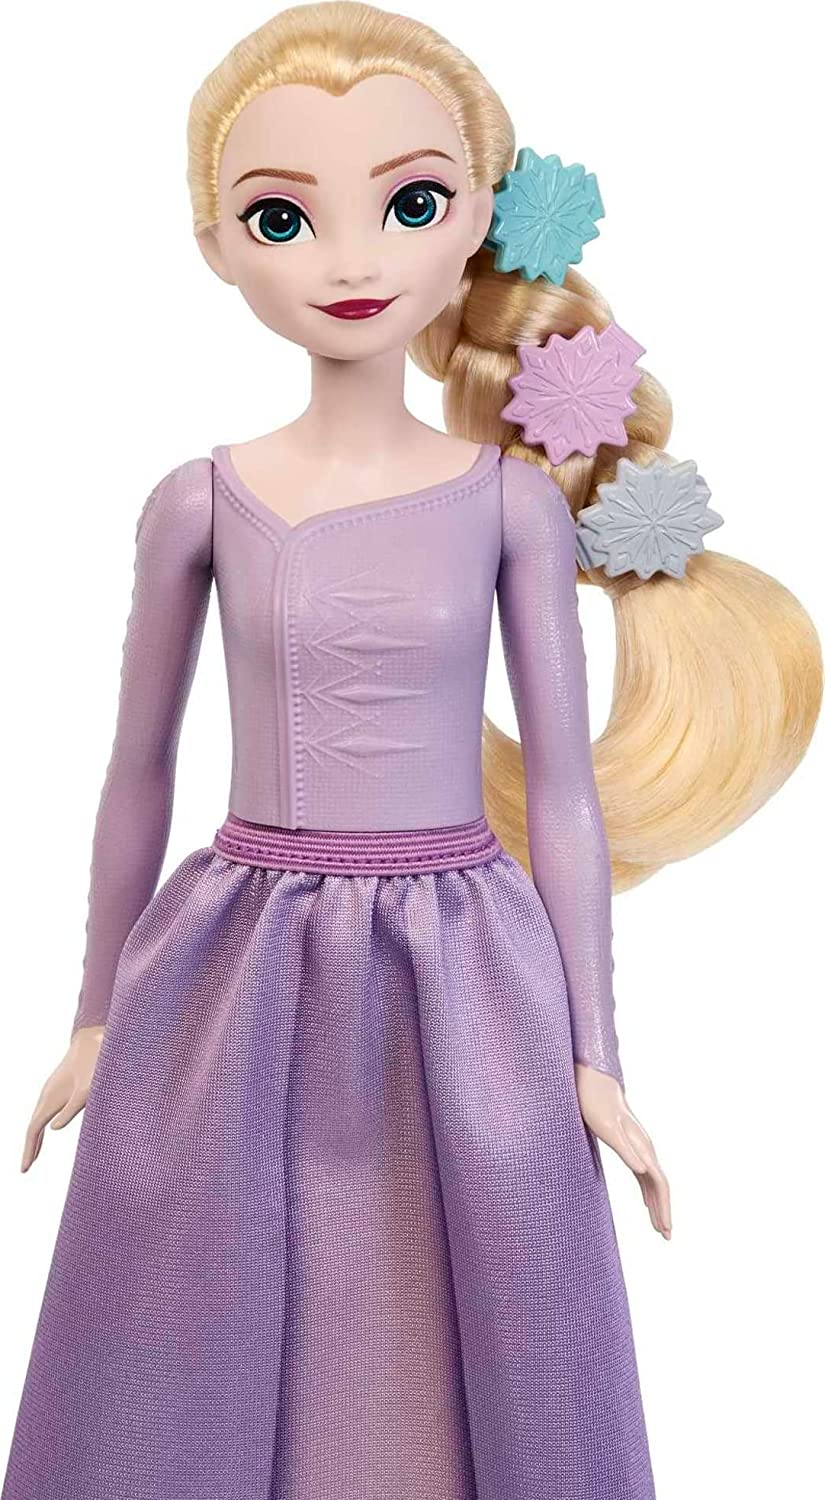 New Disney Frozen and Frozen 2 dolls from Mattel